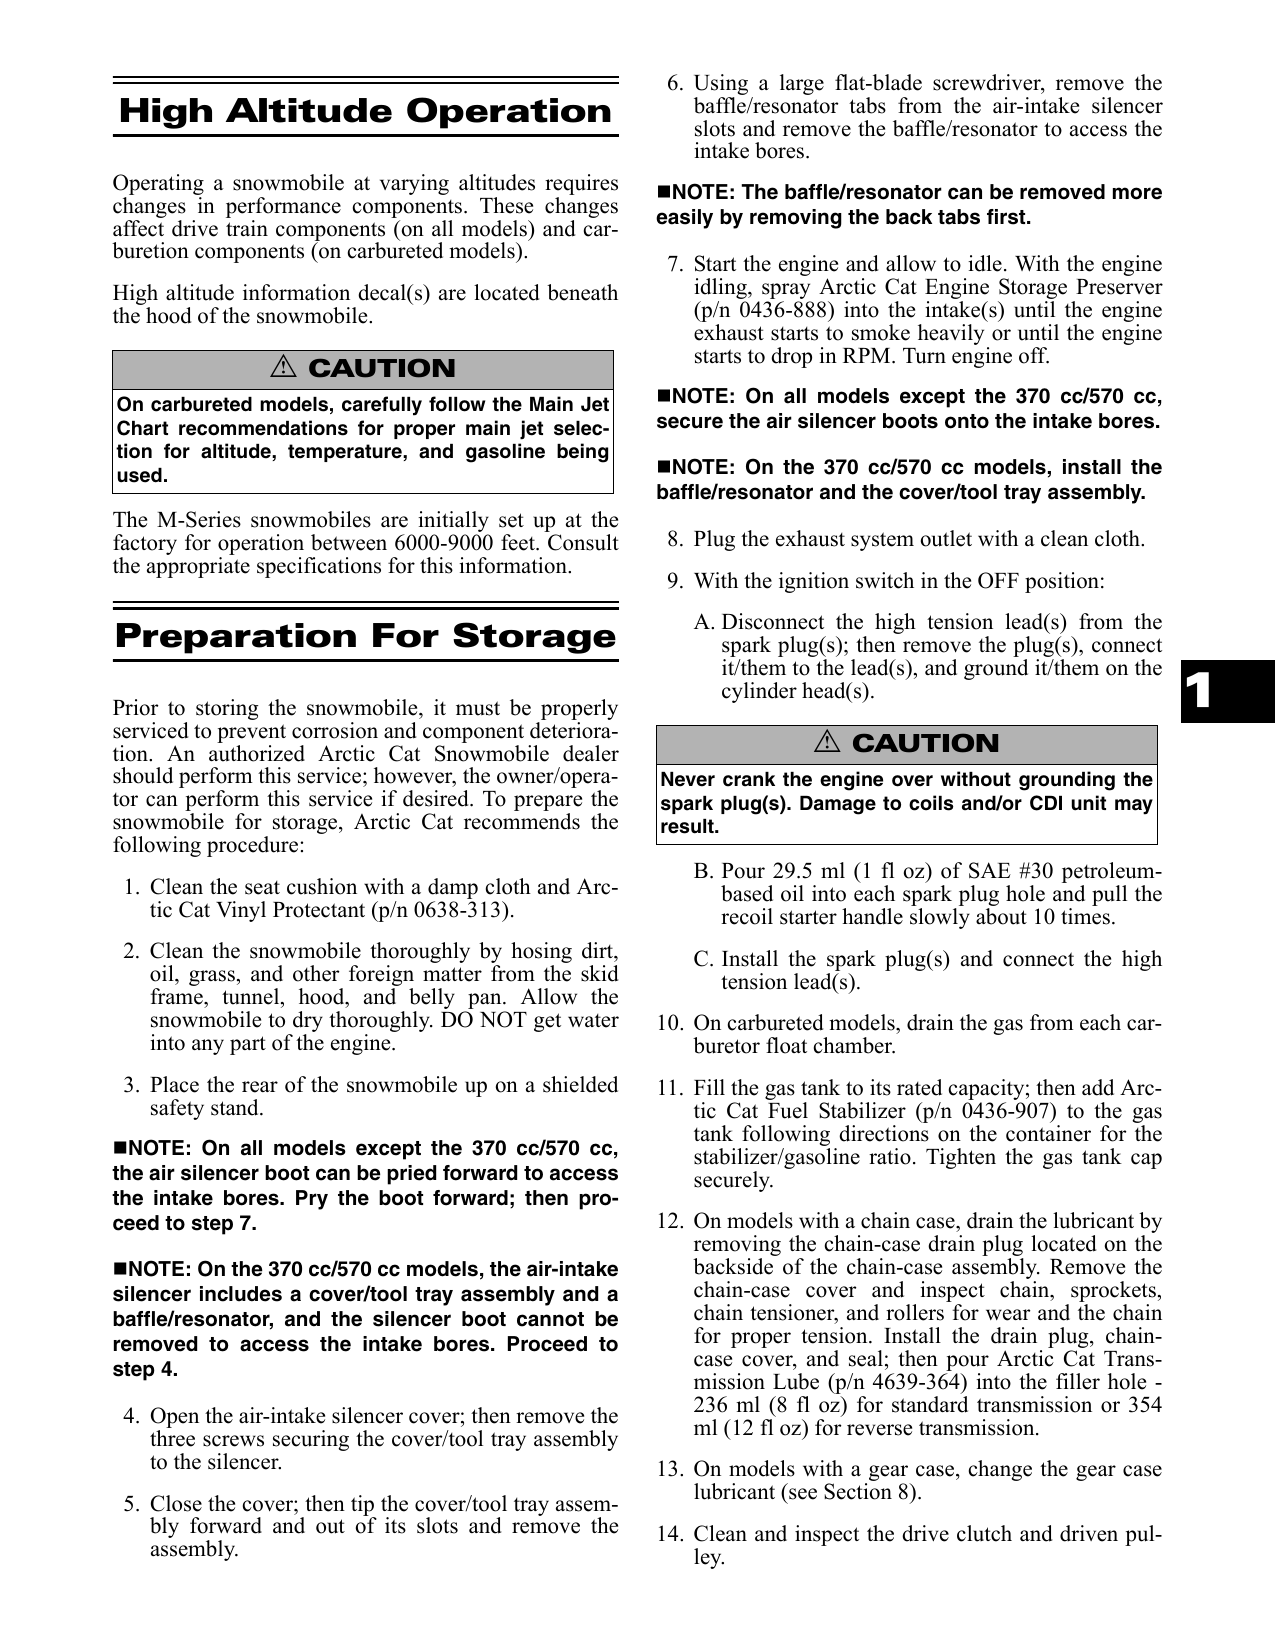 2007 Arctic Cat Snowmobile manual Preview image 3